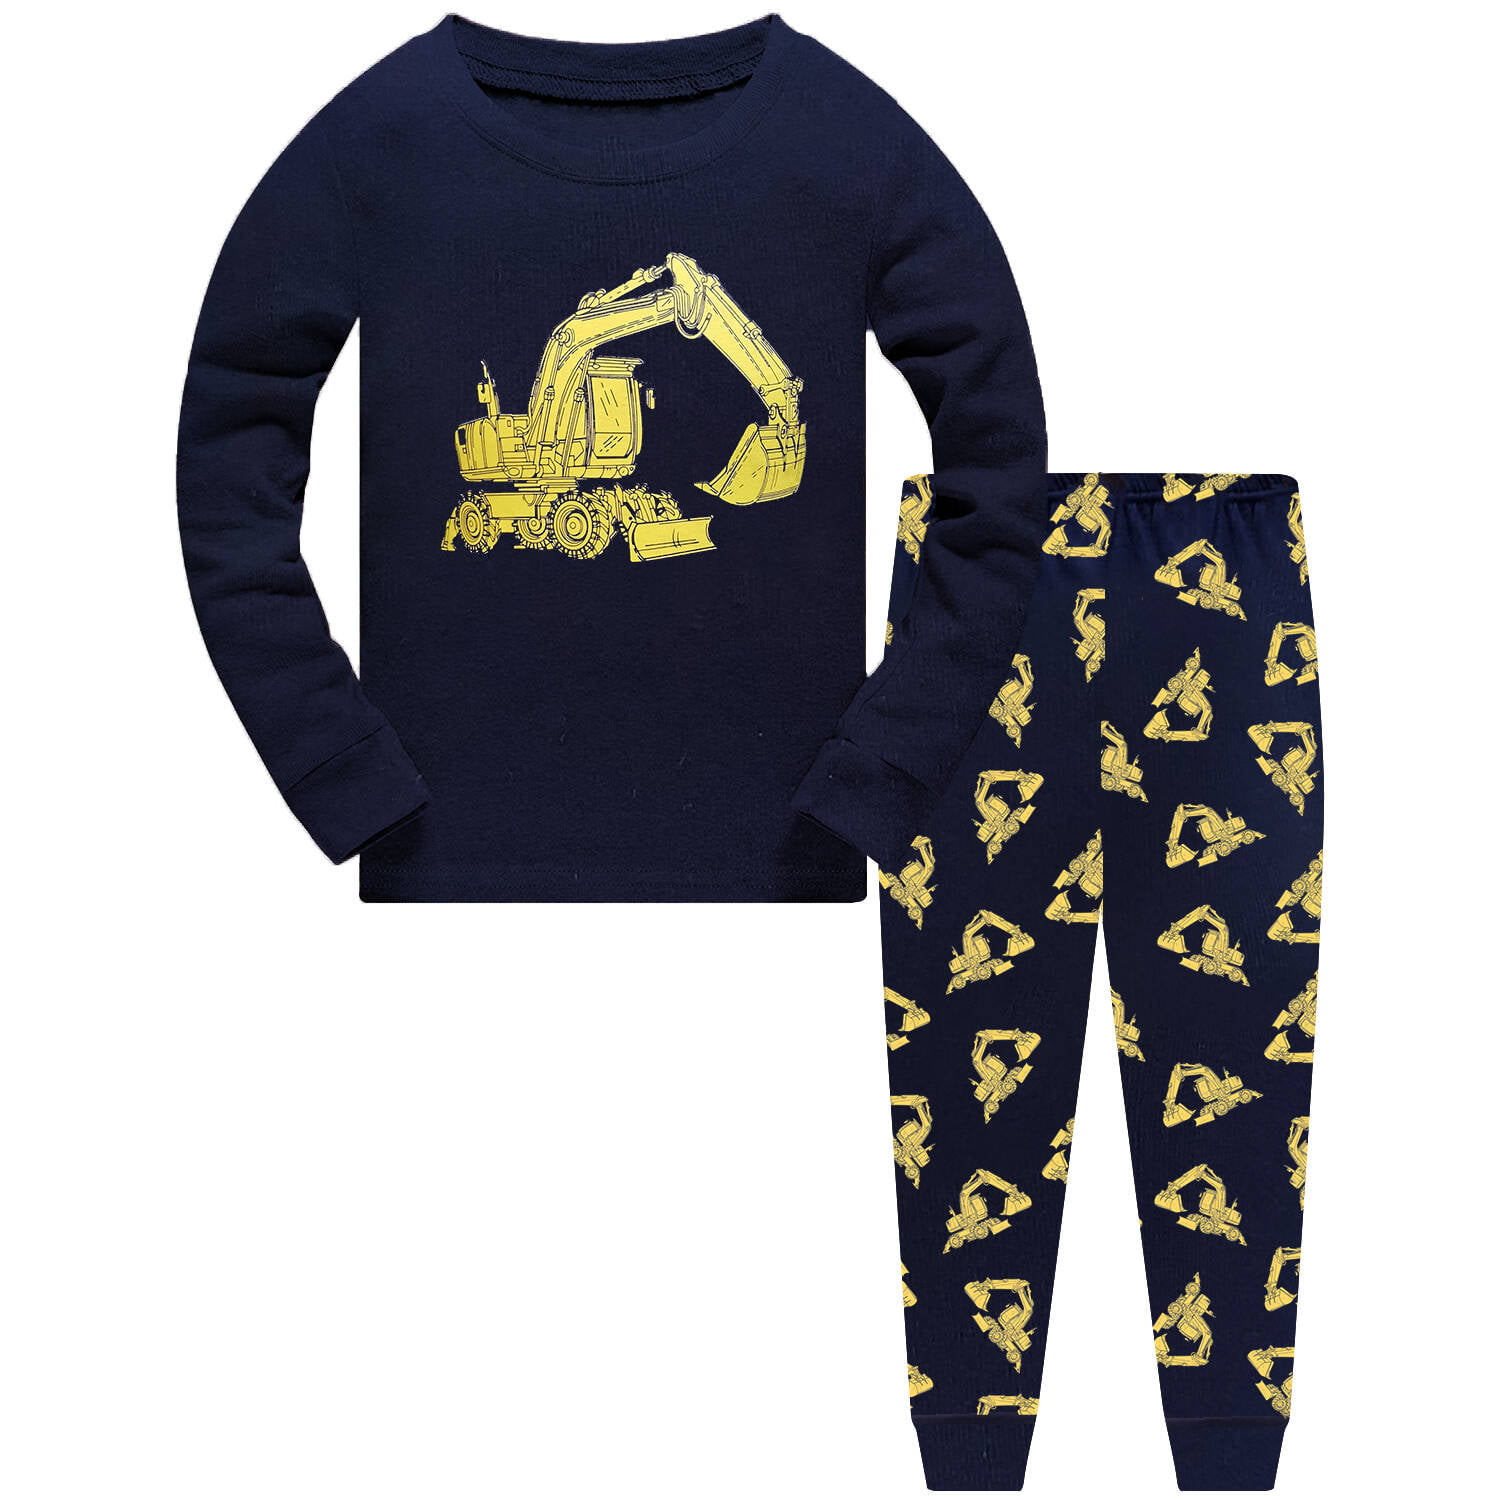 Toddler Boys Planet Pajamas Dinosaur Cotton Kids Rocket 2 Piece Train Kids Pjs Sleepwear Clothing Sets 